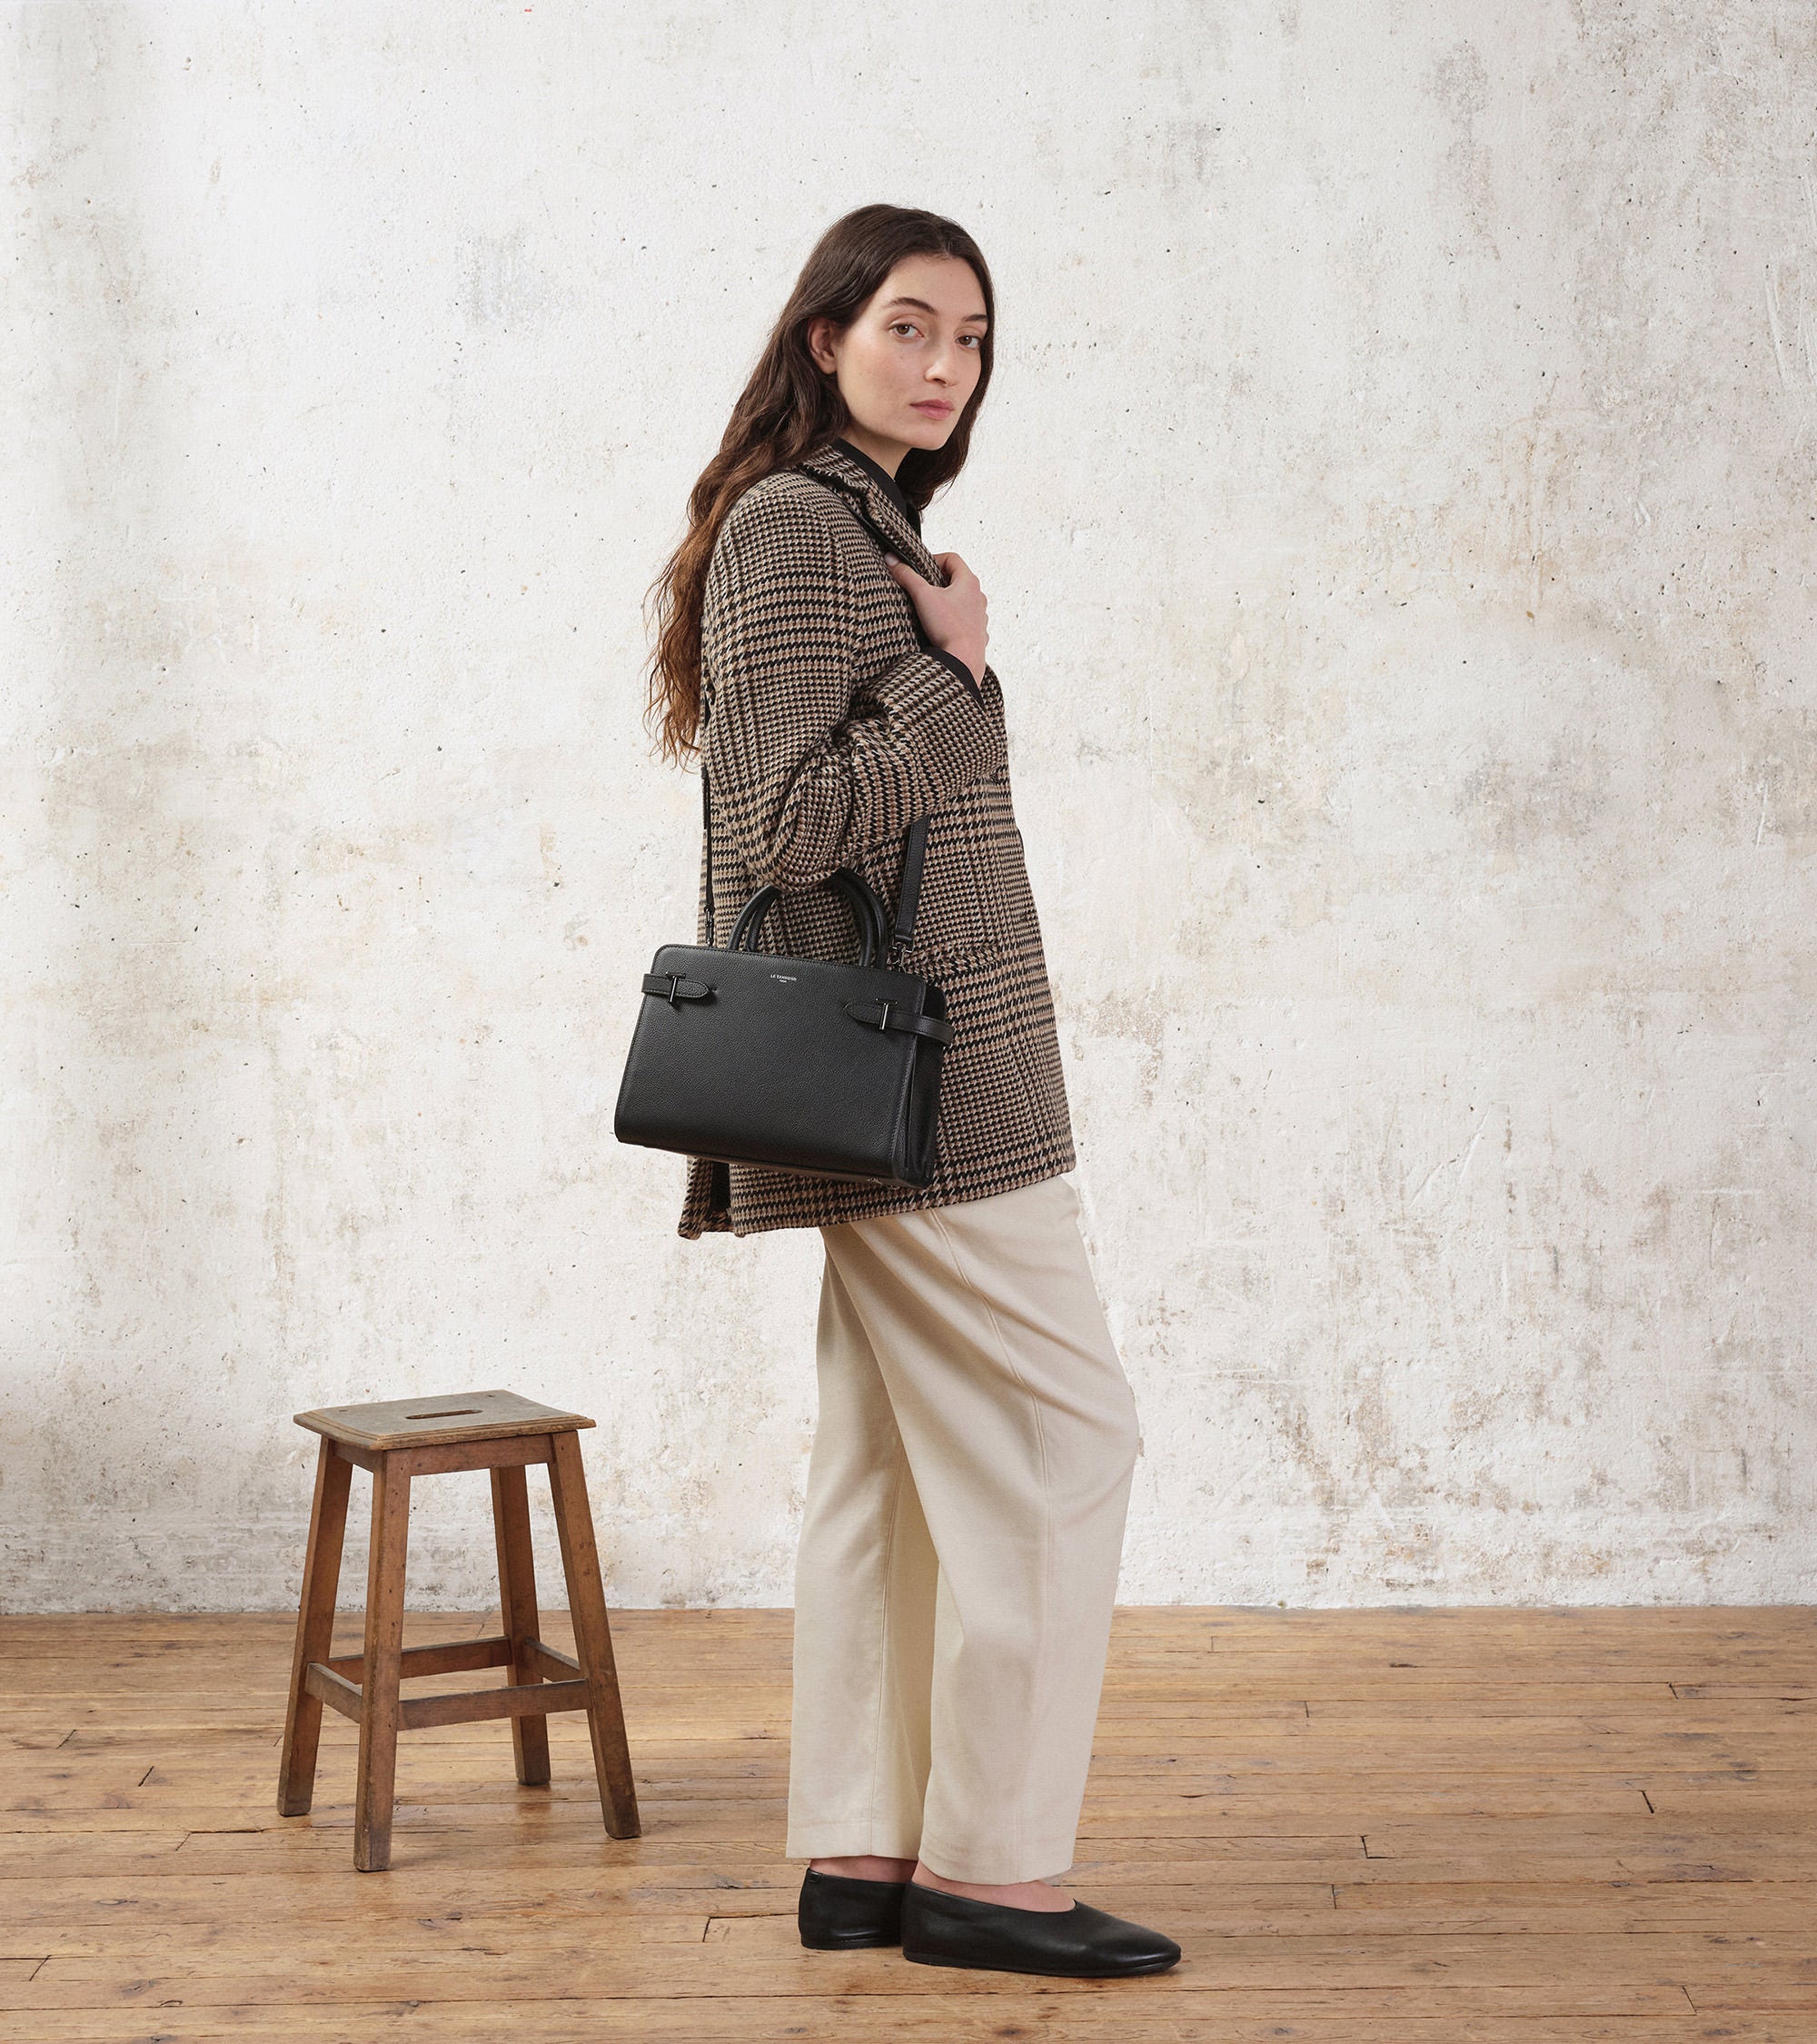 Emilie medium-sized handbag in pebbled leather